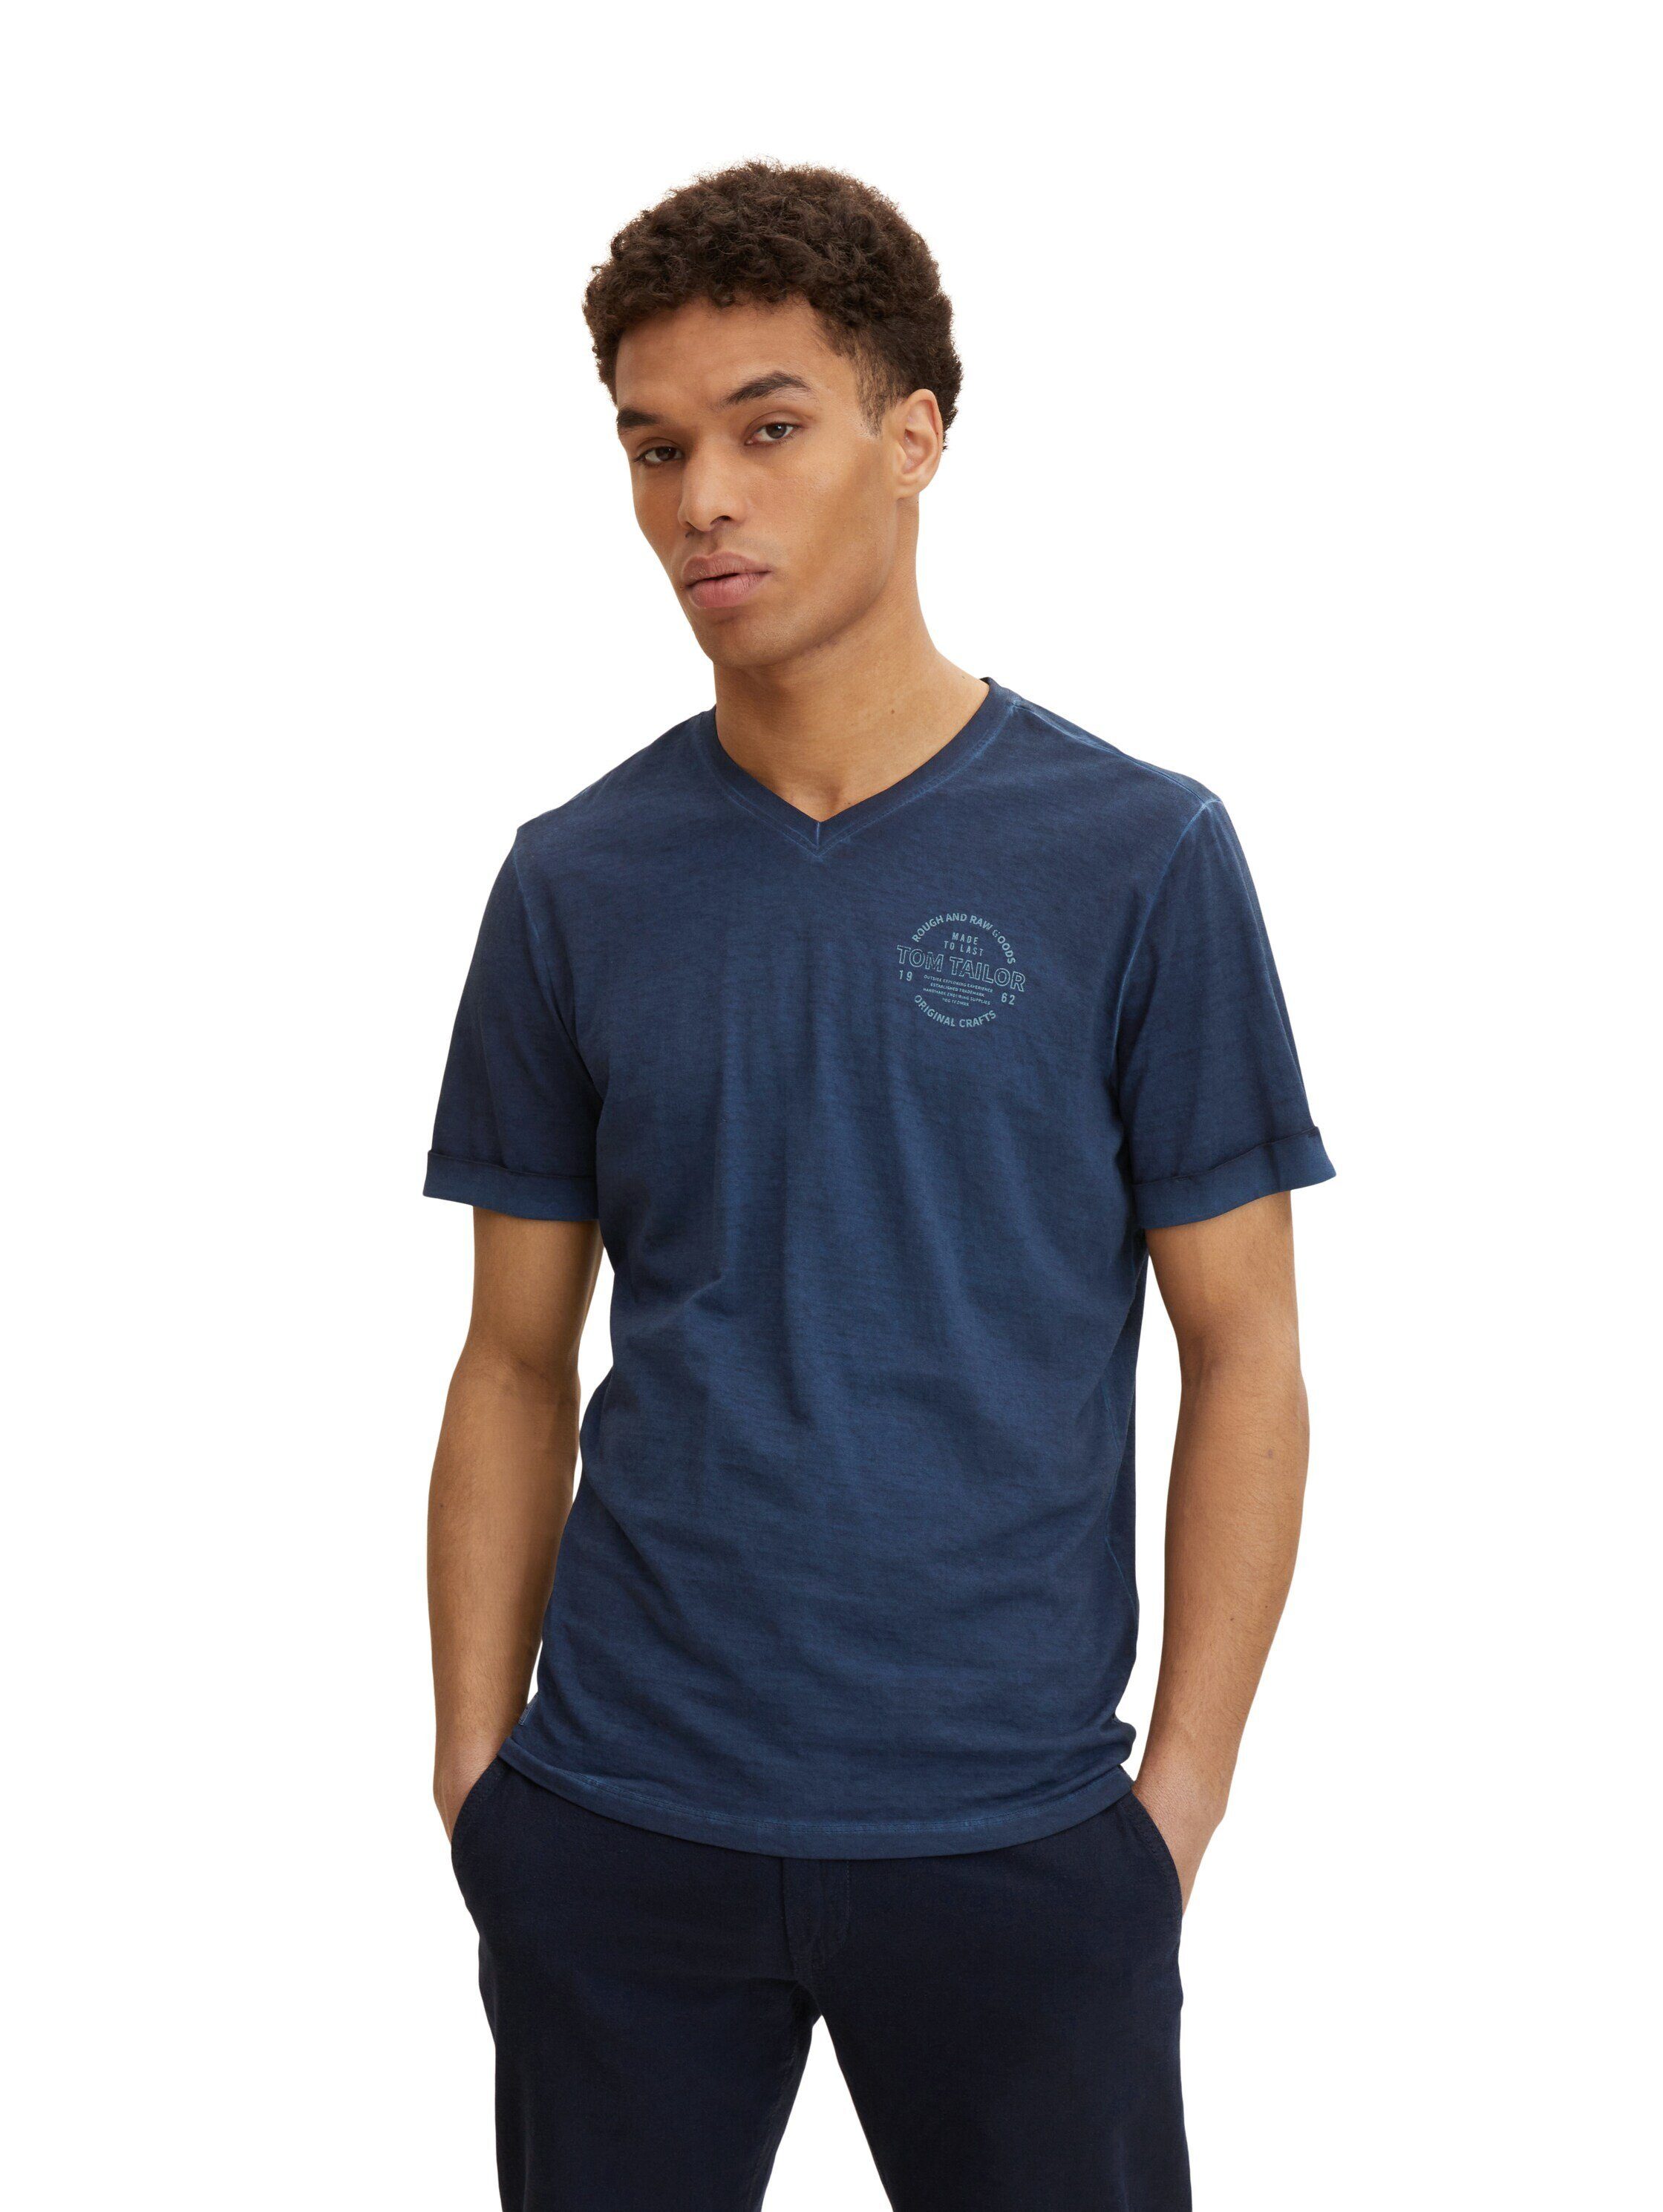 mit Logo Shirt TAILOR blau TOM T-Shirt V-Ausschnitt Print und T-Shirt